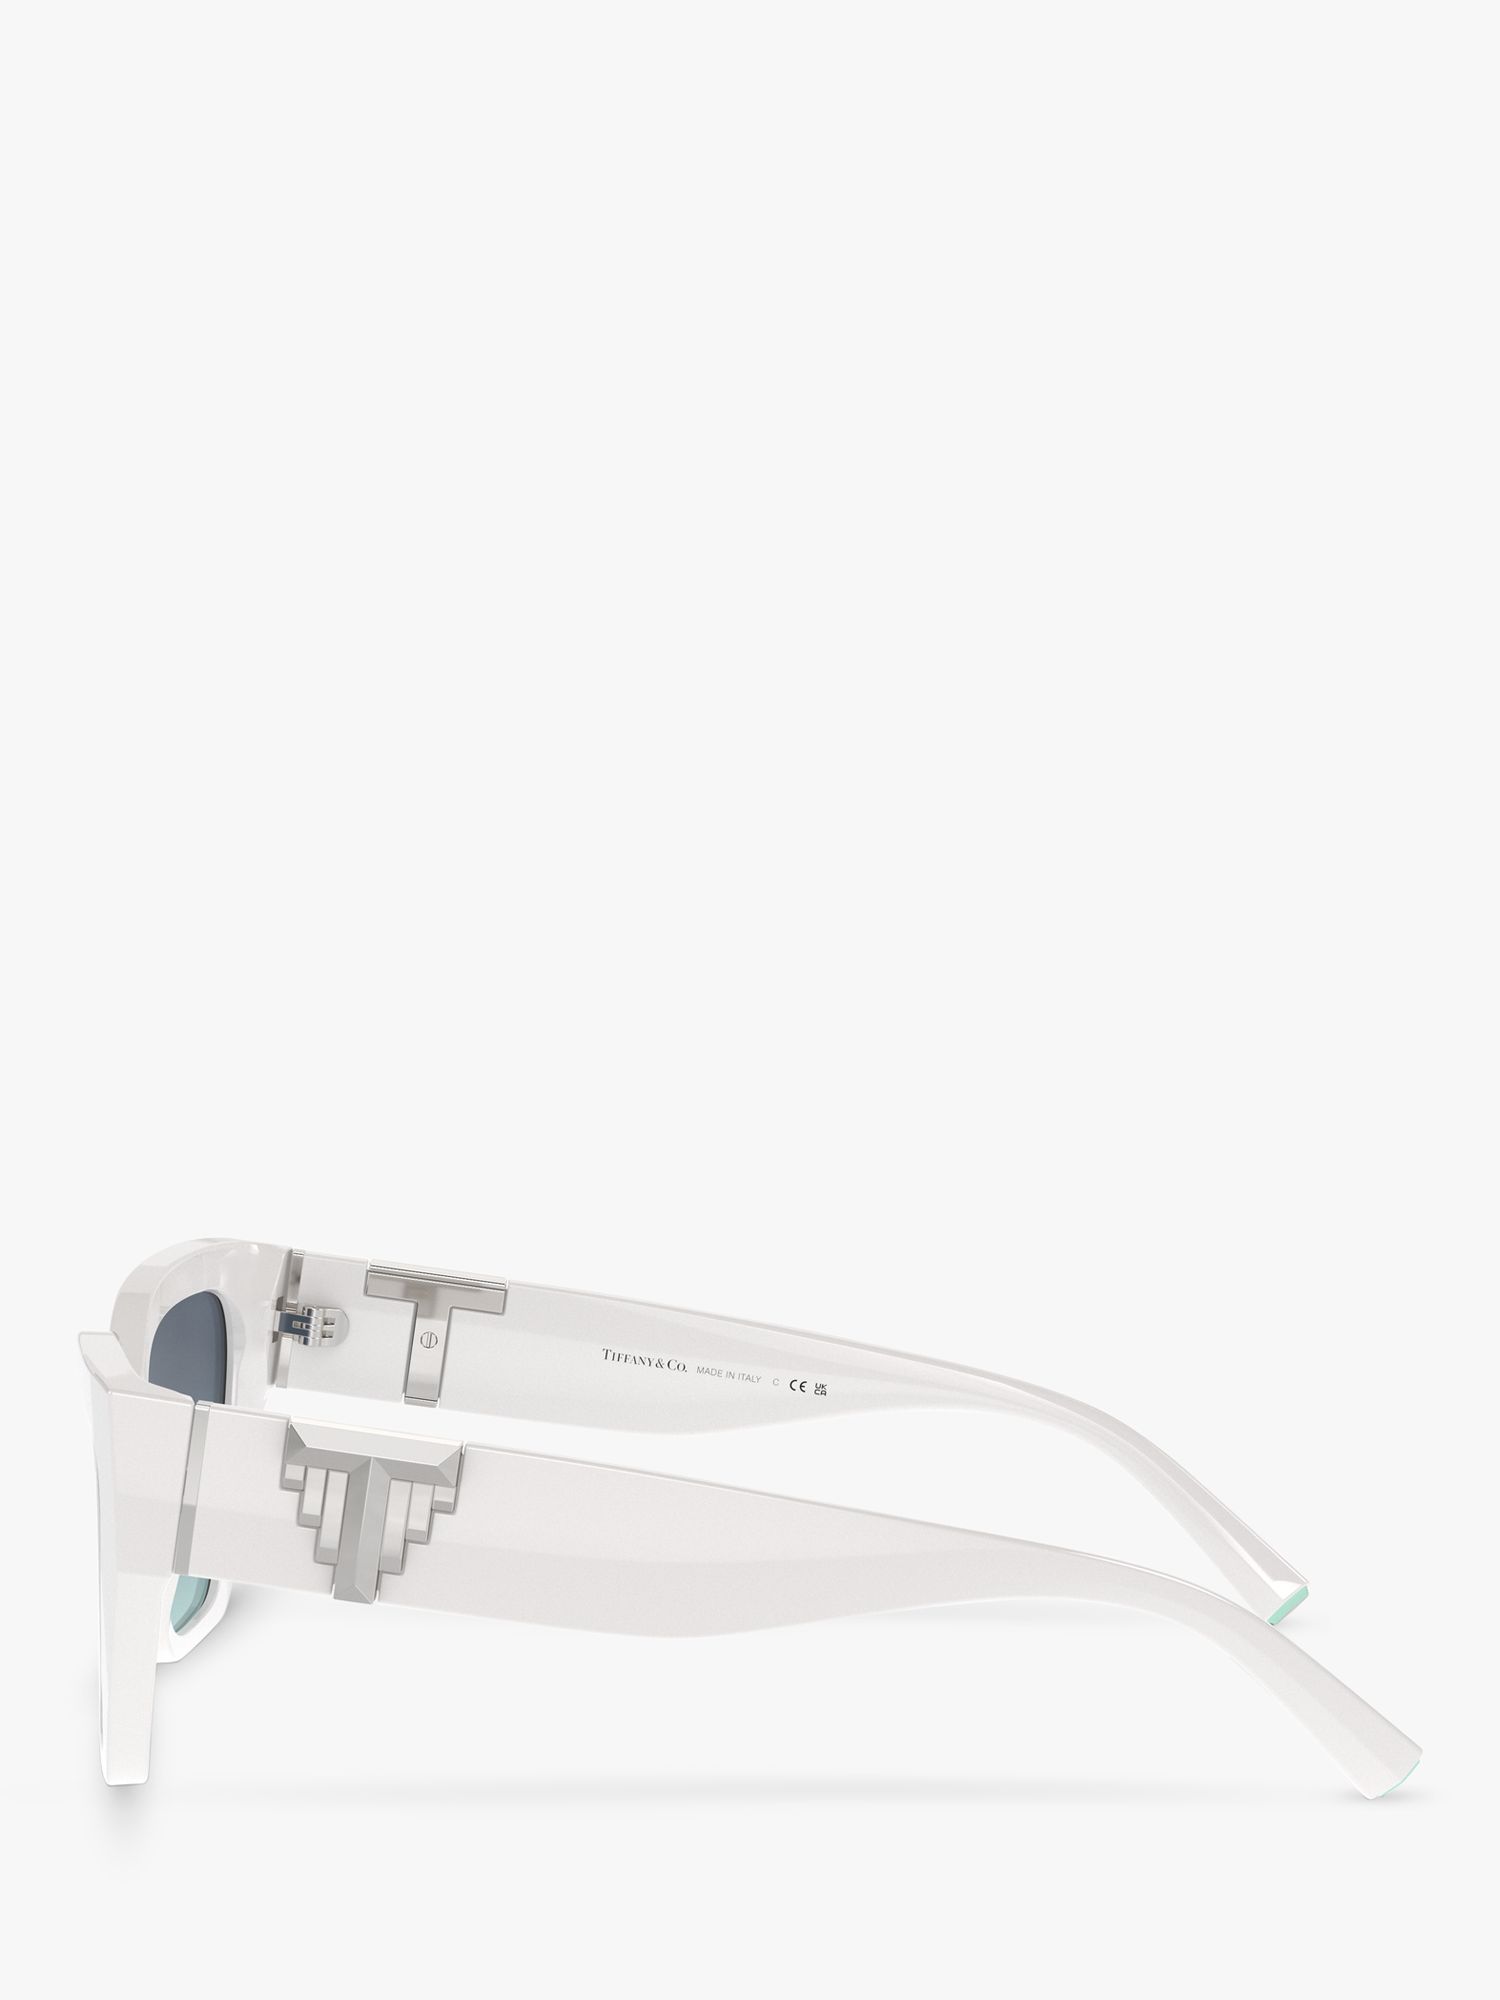 Tiffany & Co TF4218 Women's Squared Cat's Eye Sunglasses, White/Blue Gradient